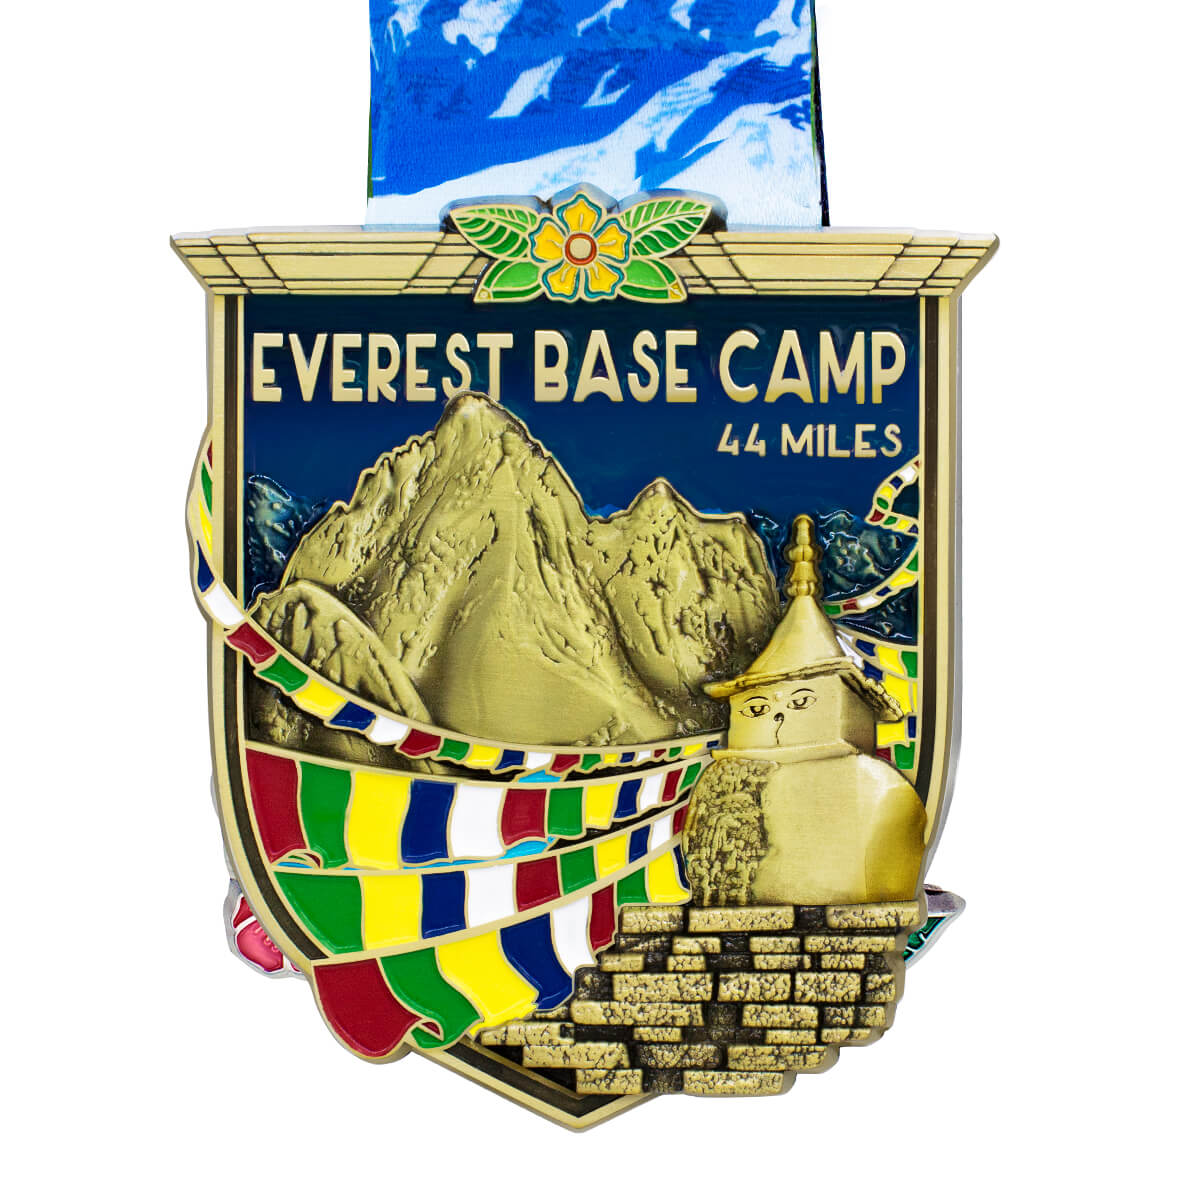 Everest Base Camp Virtual Challenge